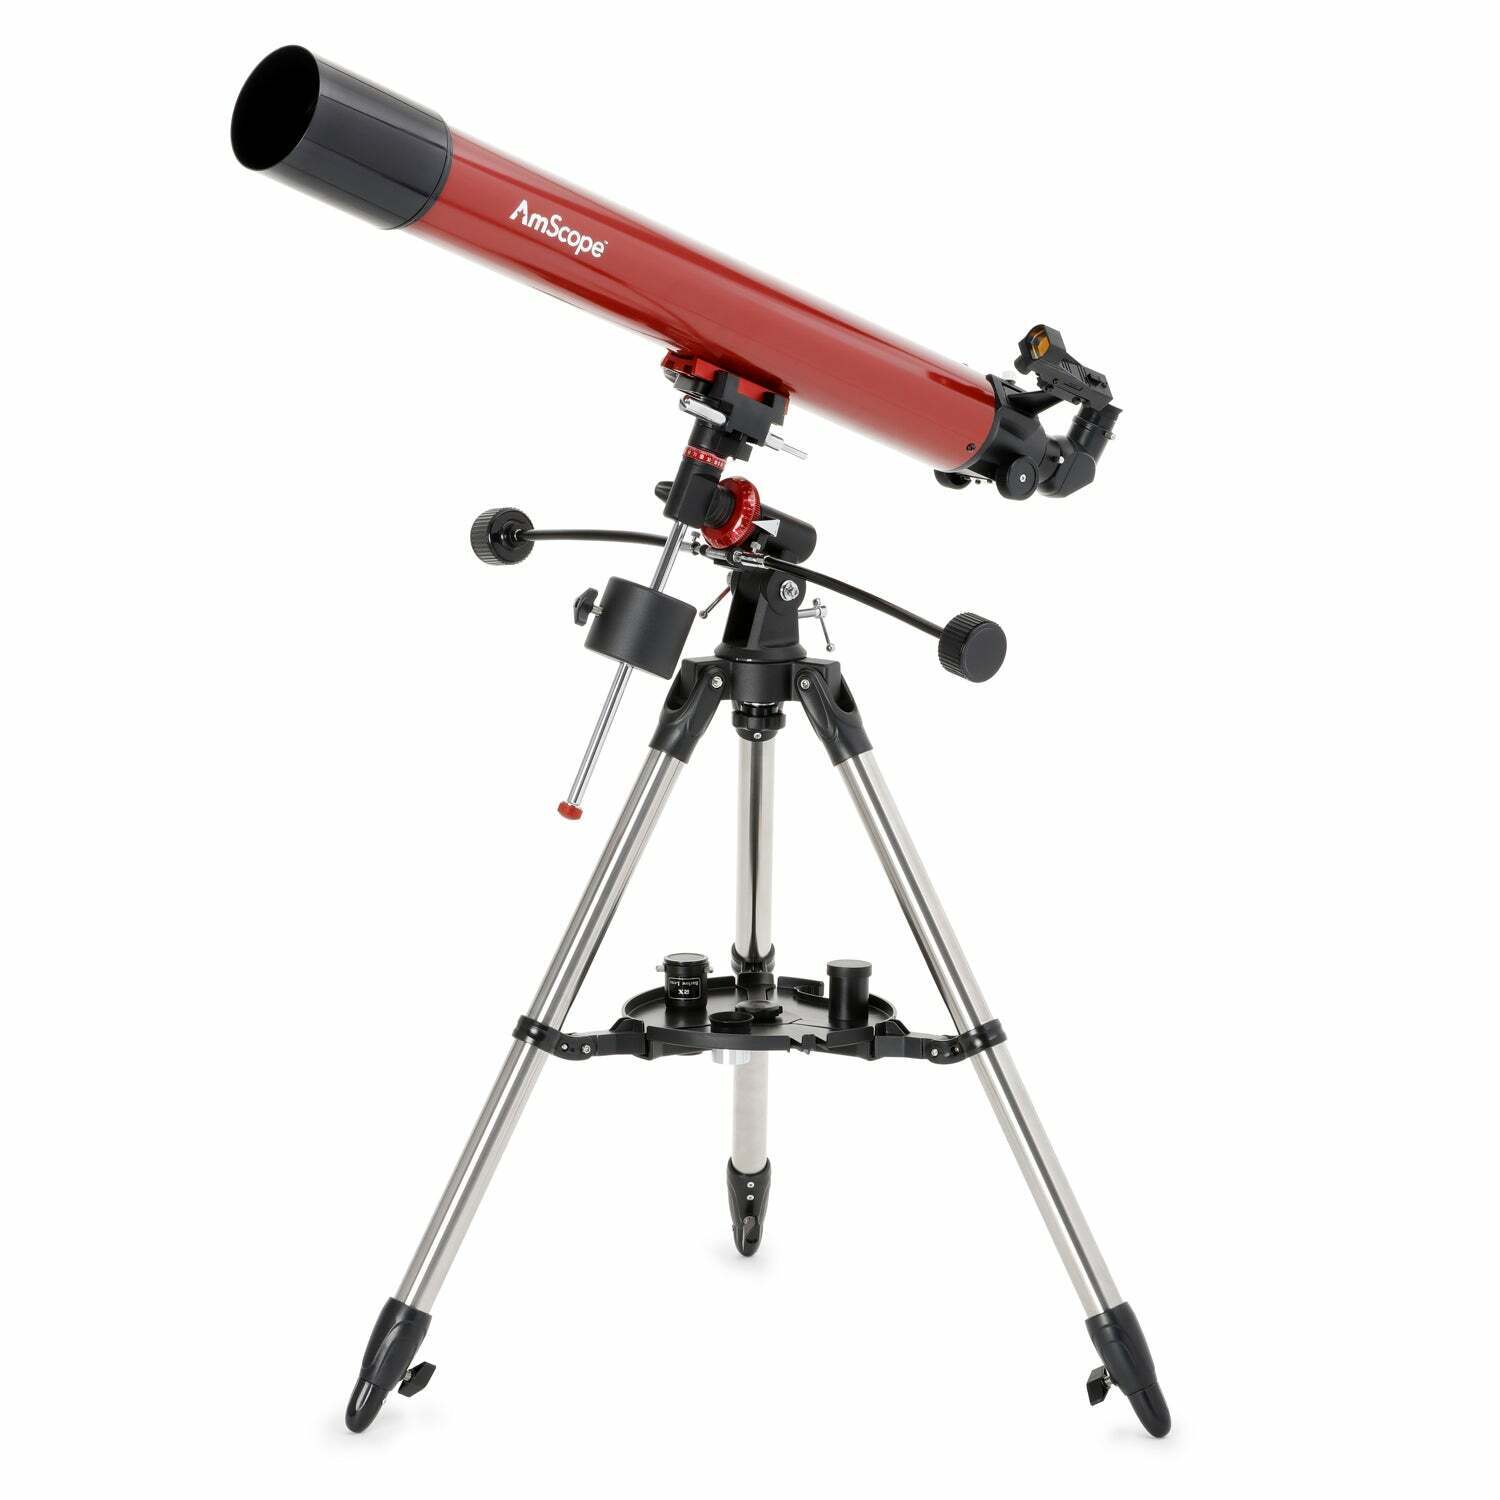 AmScope Refractor EQ Telescope 80mm Aperture, 900mm Focal Length +Red Dot Finder